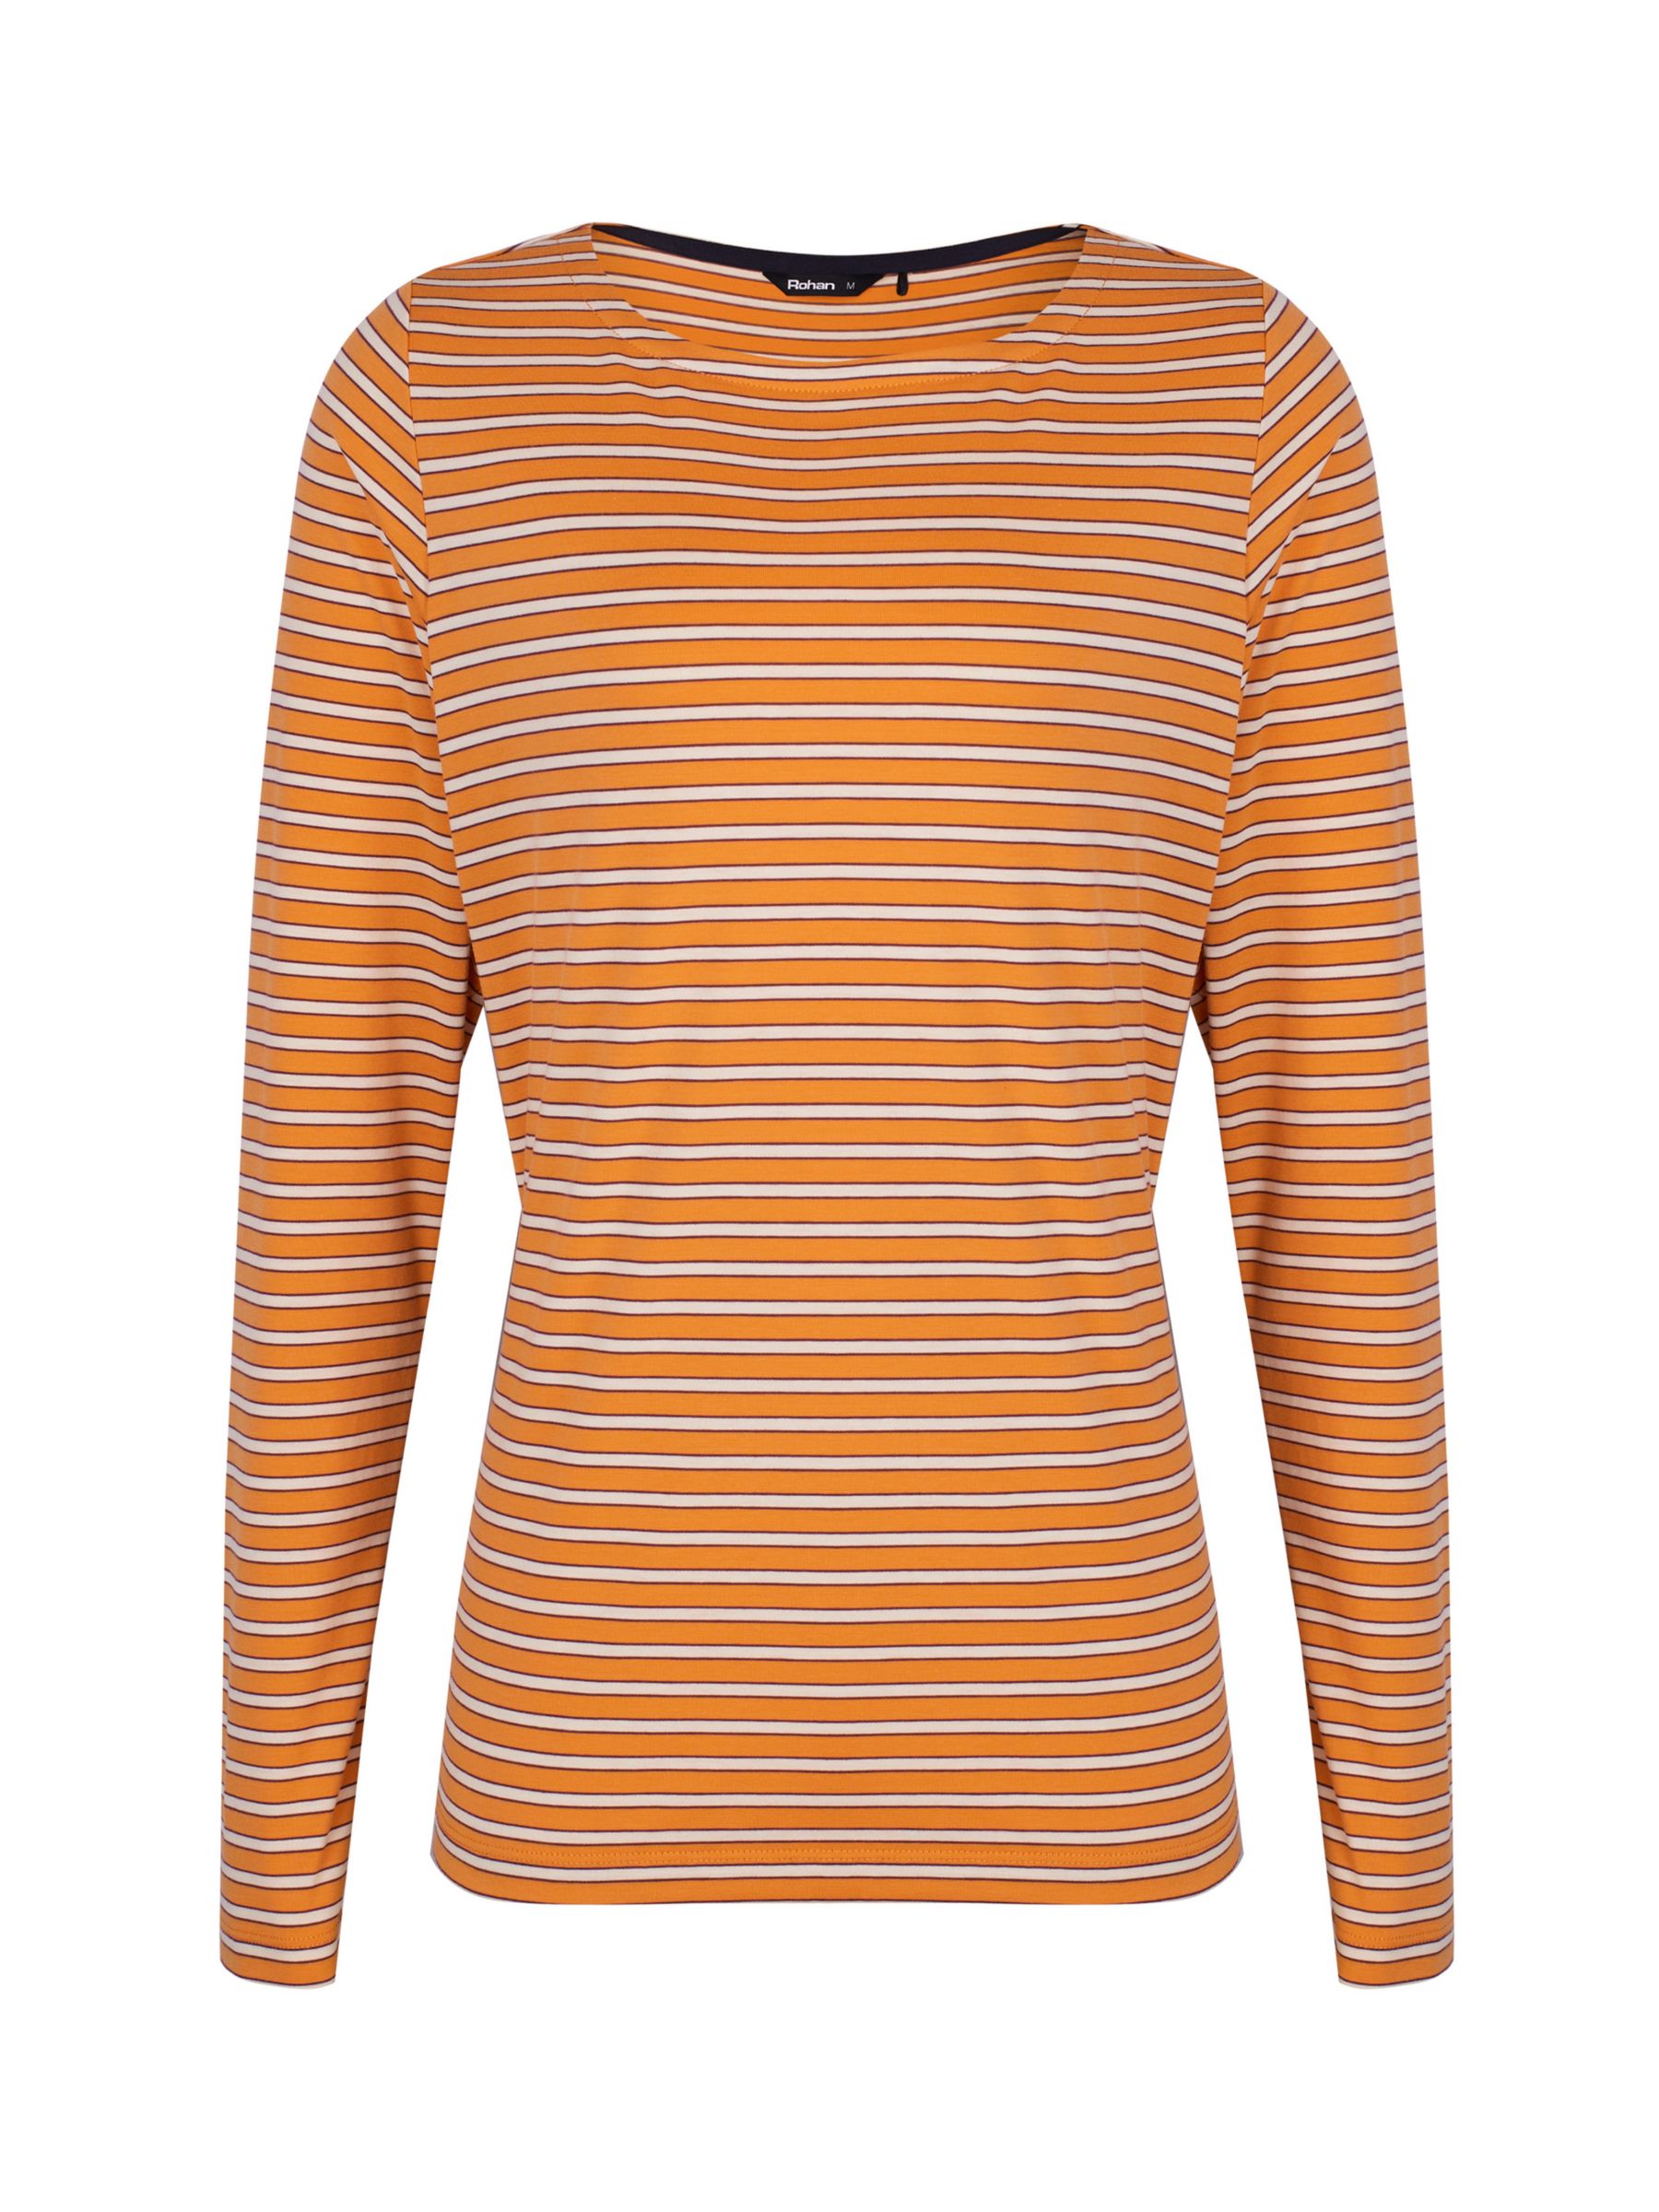 Rohan Shoreline Long Sleeve Top, Sunset Orange/Ecru, XS